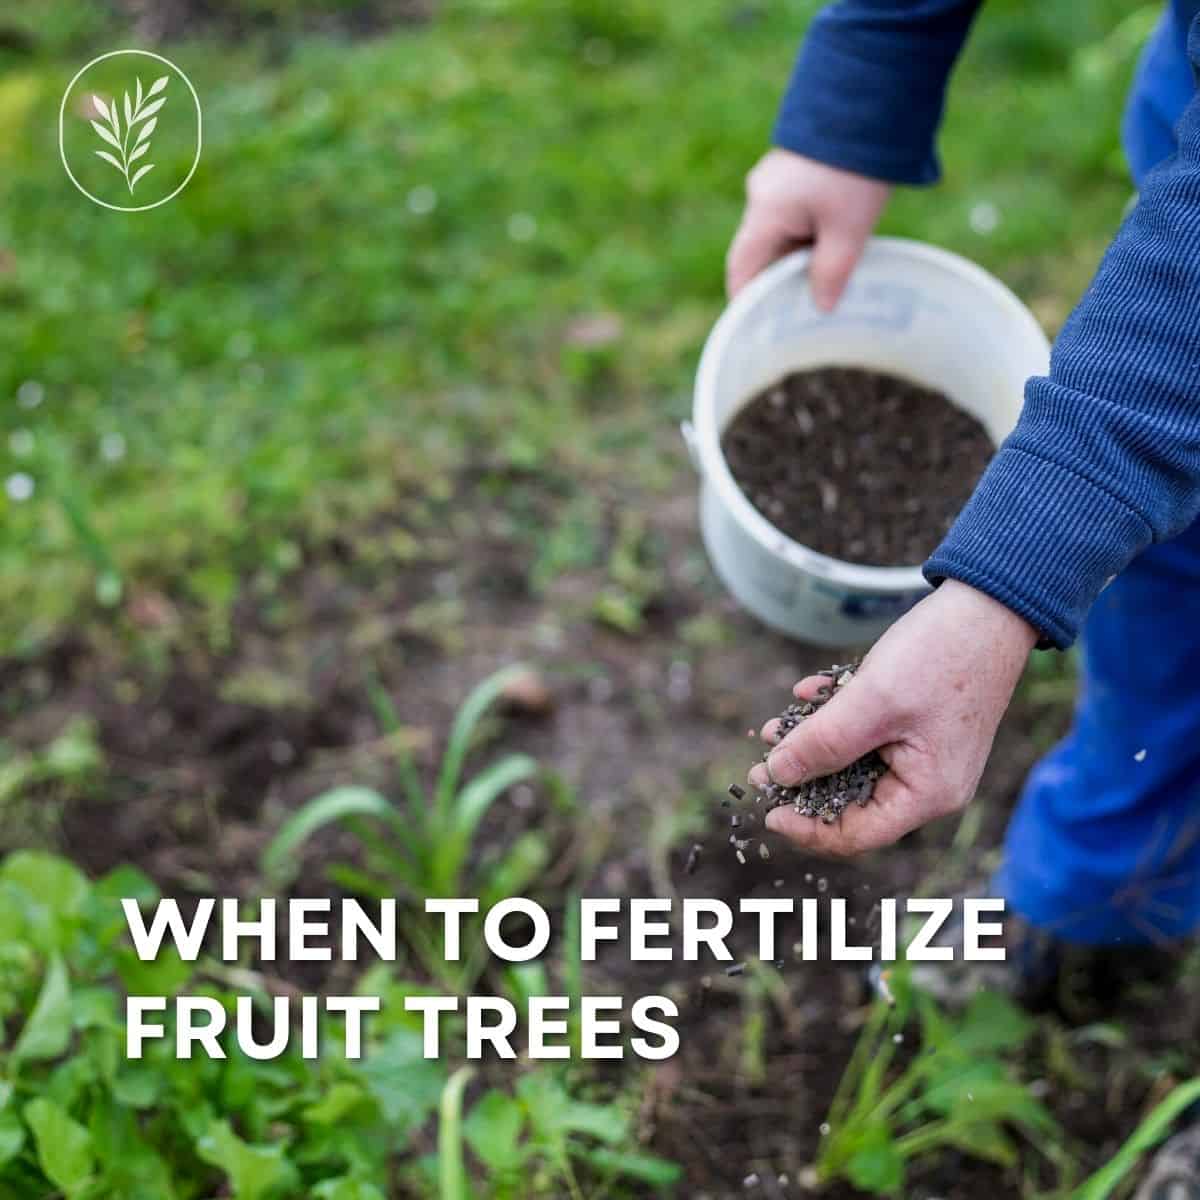 When to fertilize fruit trees via @home4theharvest